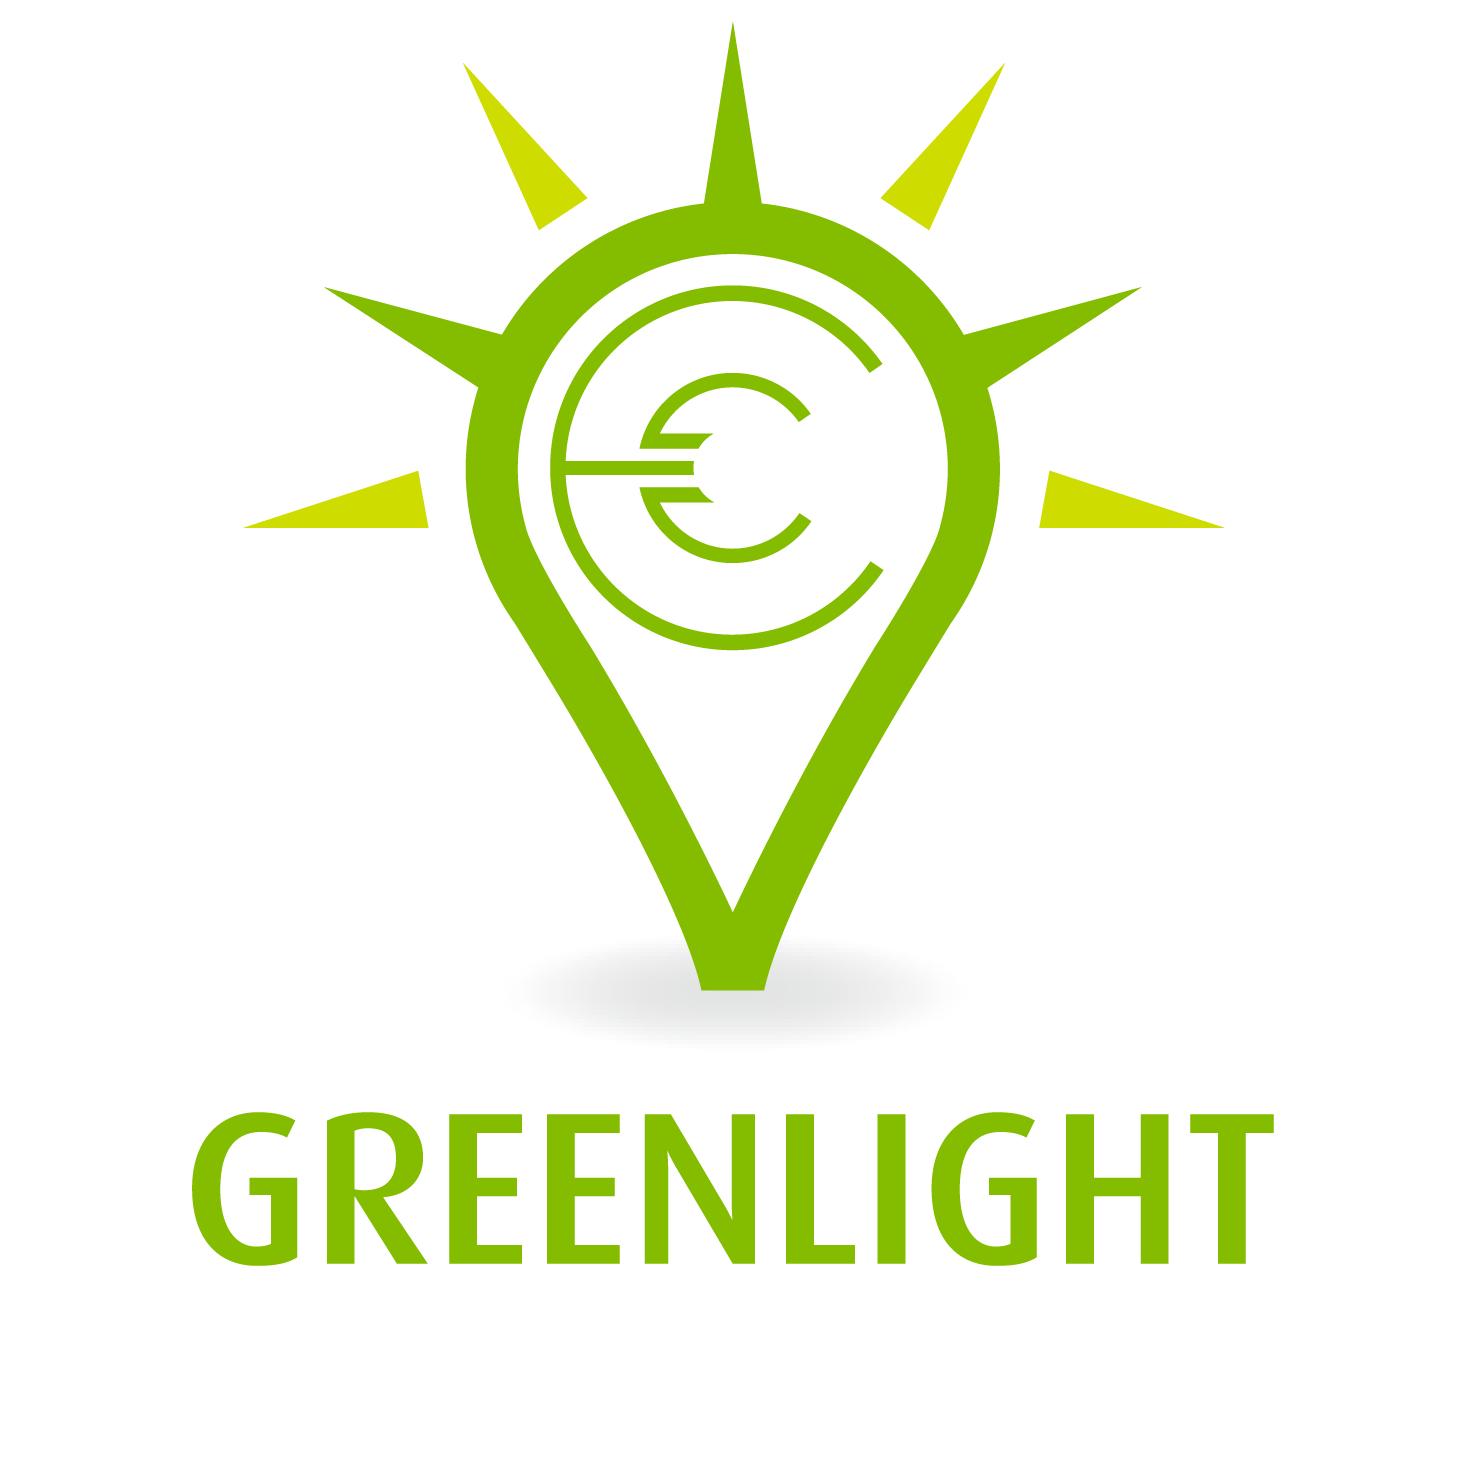 Greenlight Cyber Portrait - Alternate that sits on dark background - Links to Greenlight Cyber website